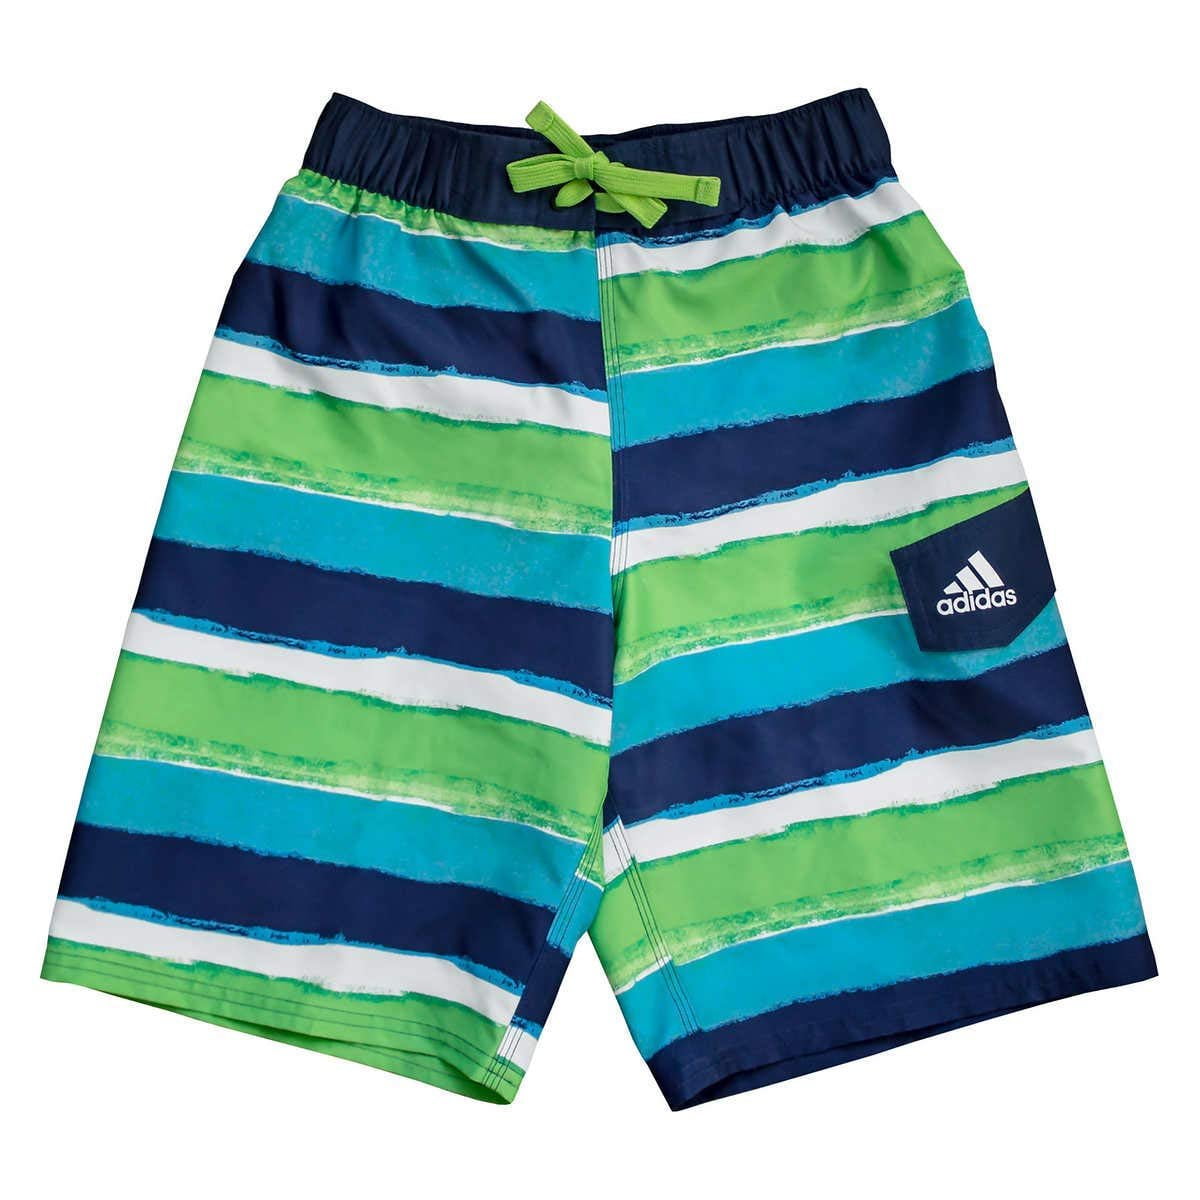 adidas Boys Swim Trunks Boardshorts (Large, Solar Stripes) - Walmart.com